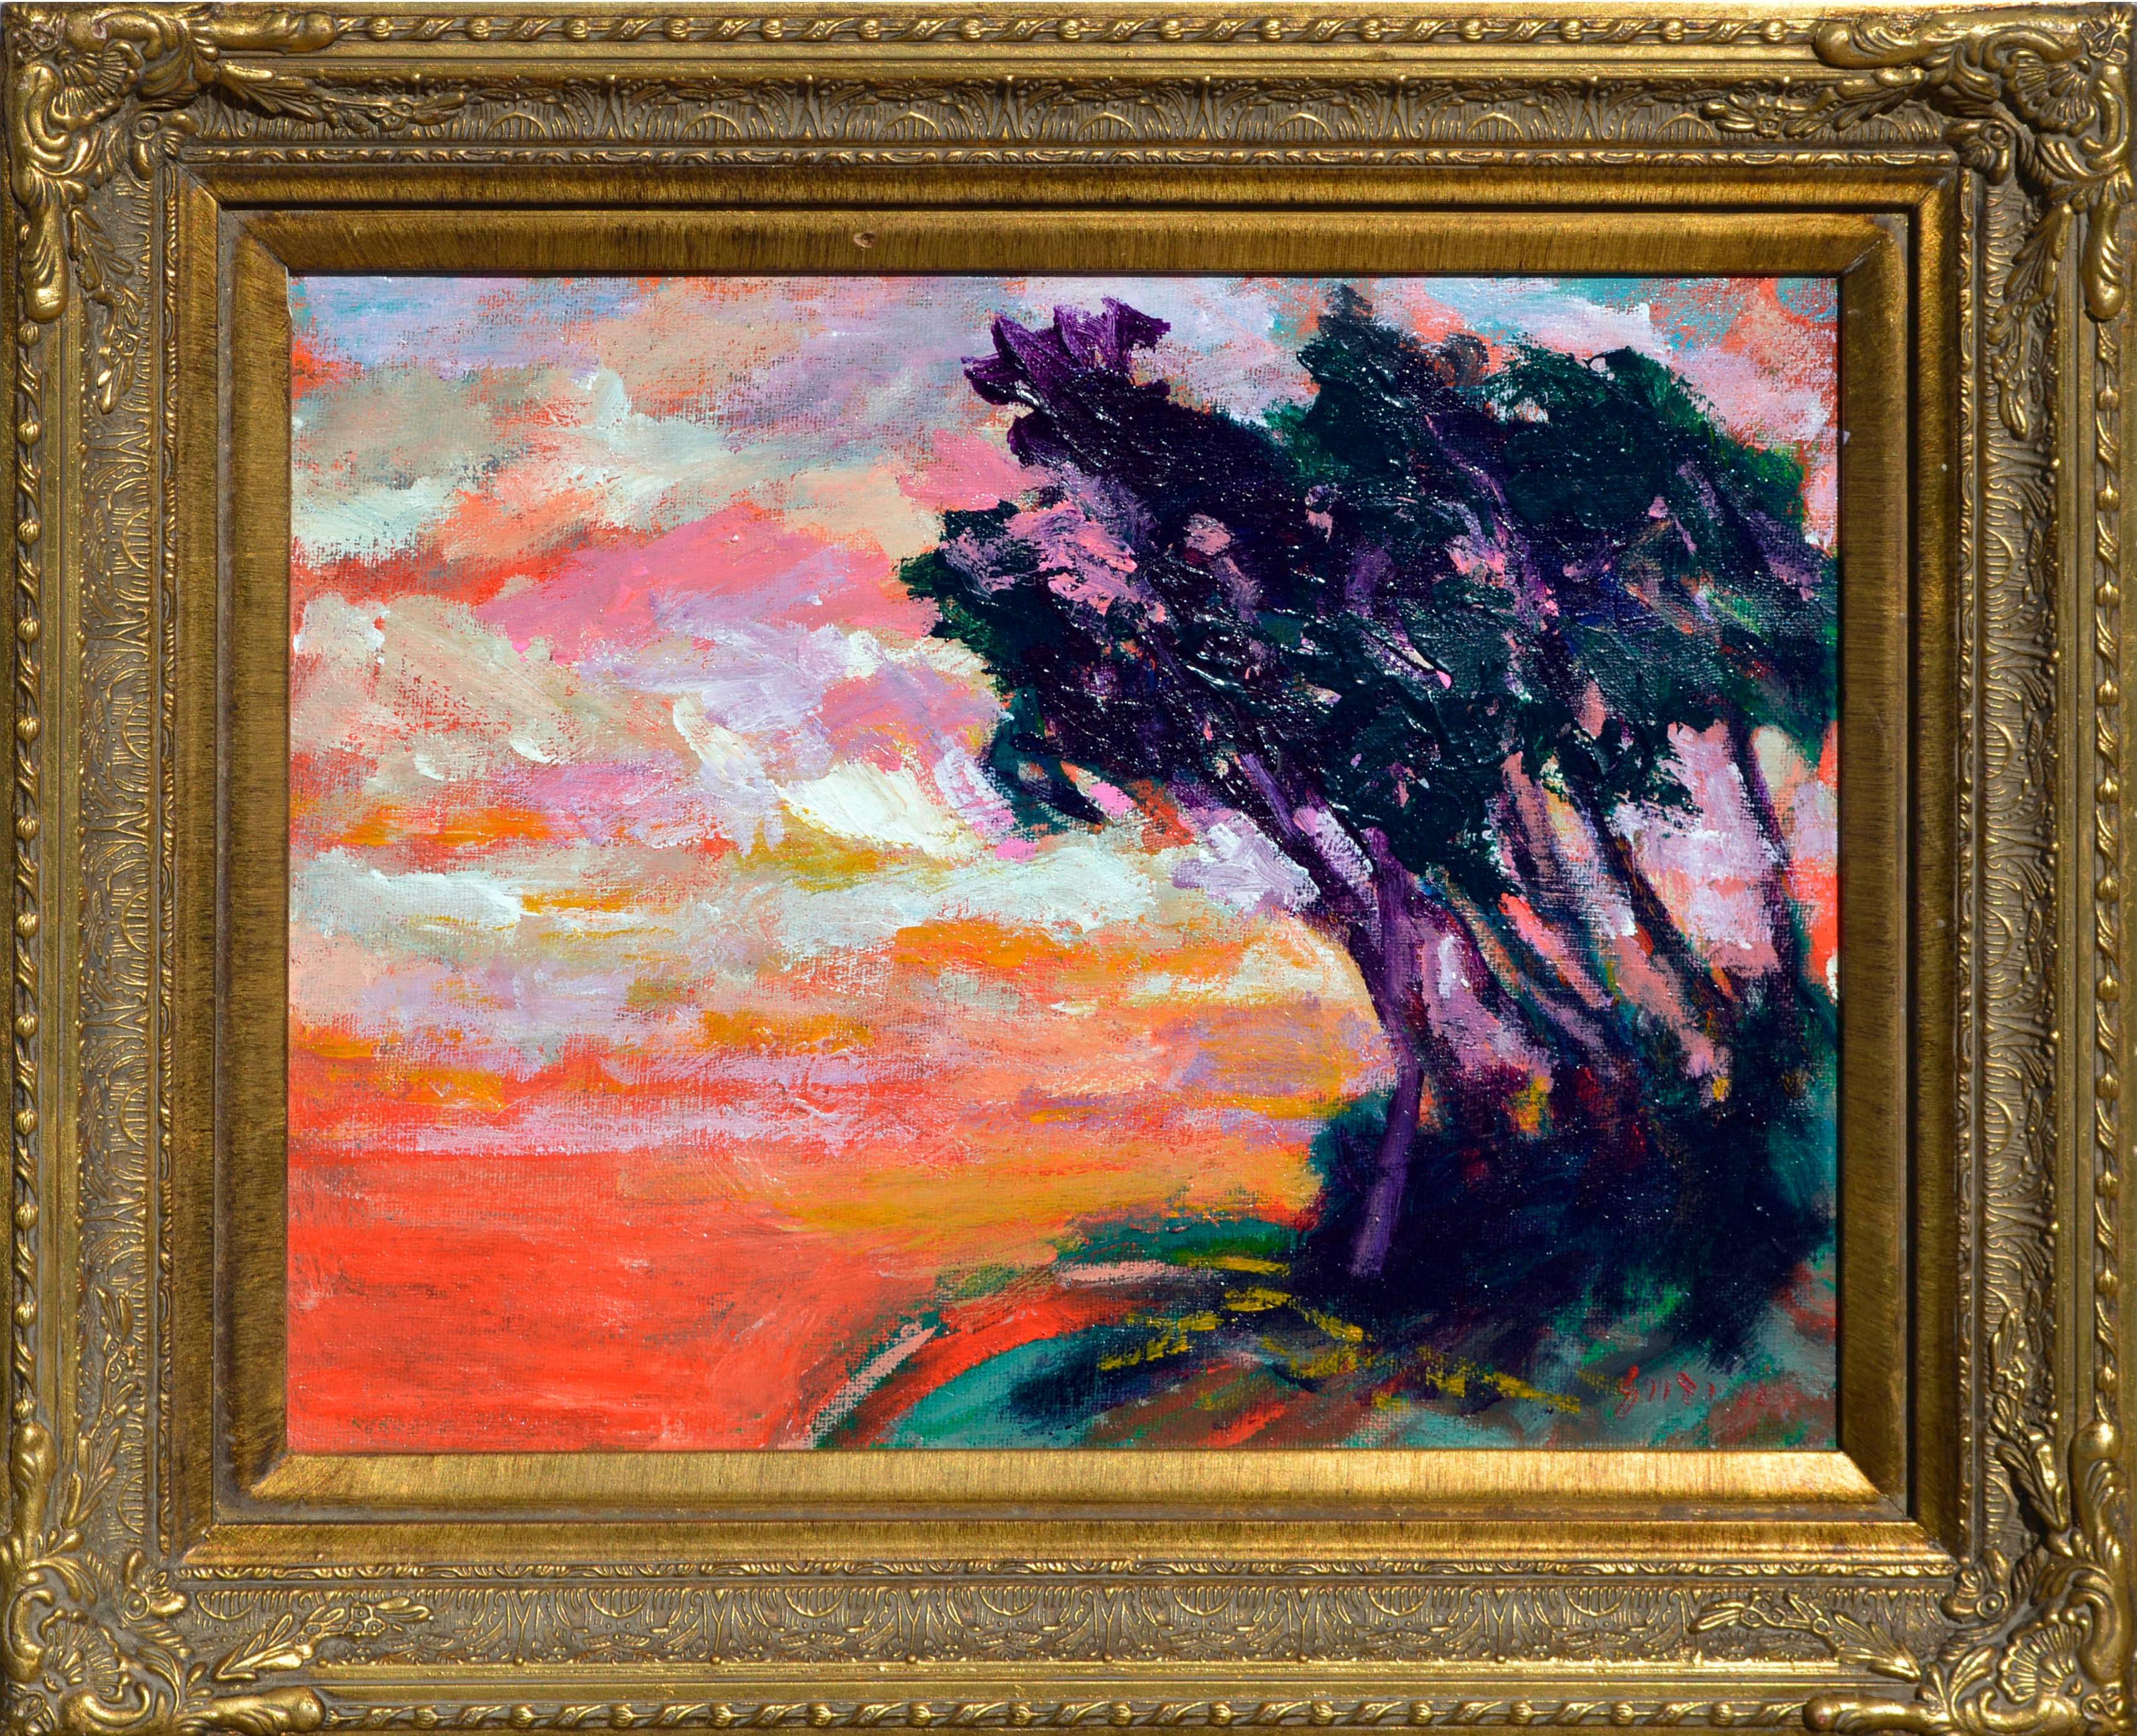 Juan Guzman-Maldonado Landscape Painting - Ventura Sunset